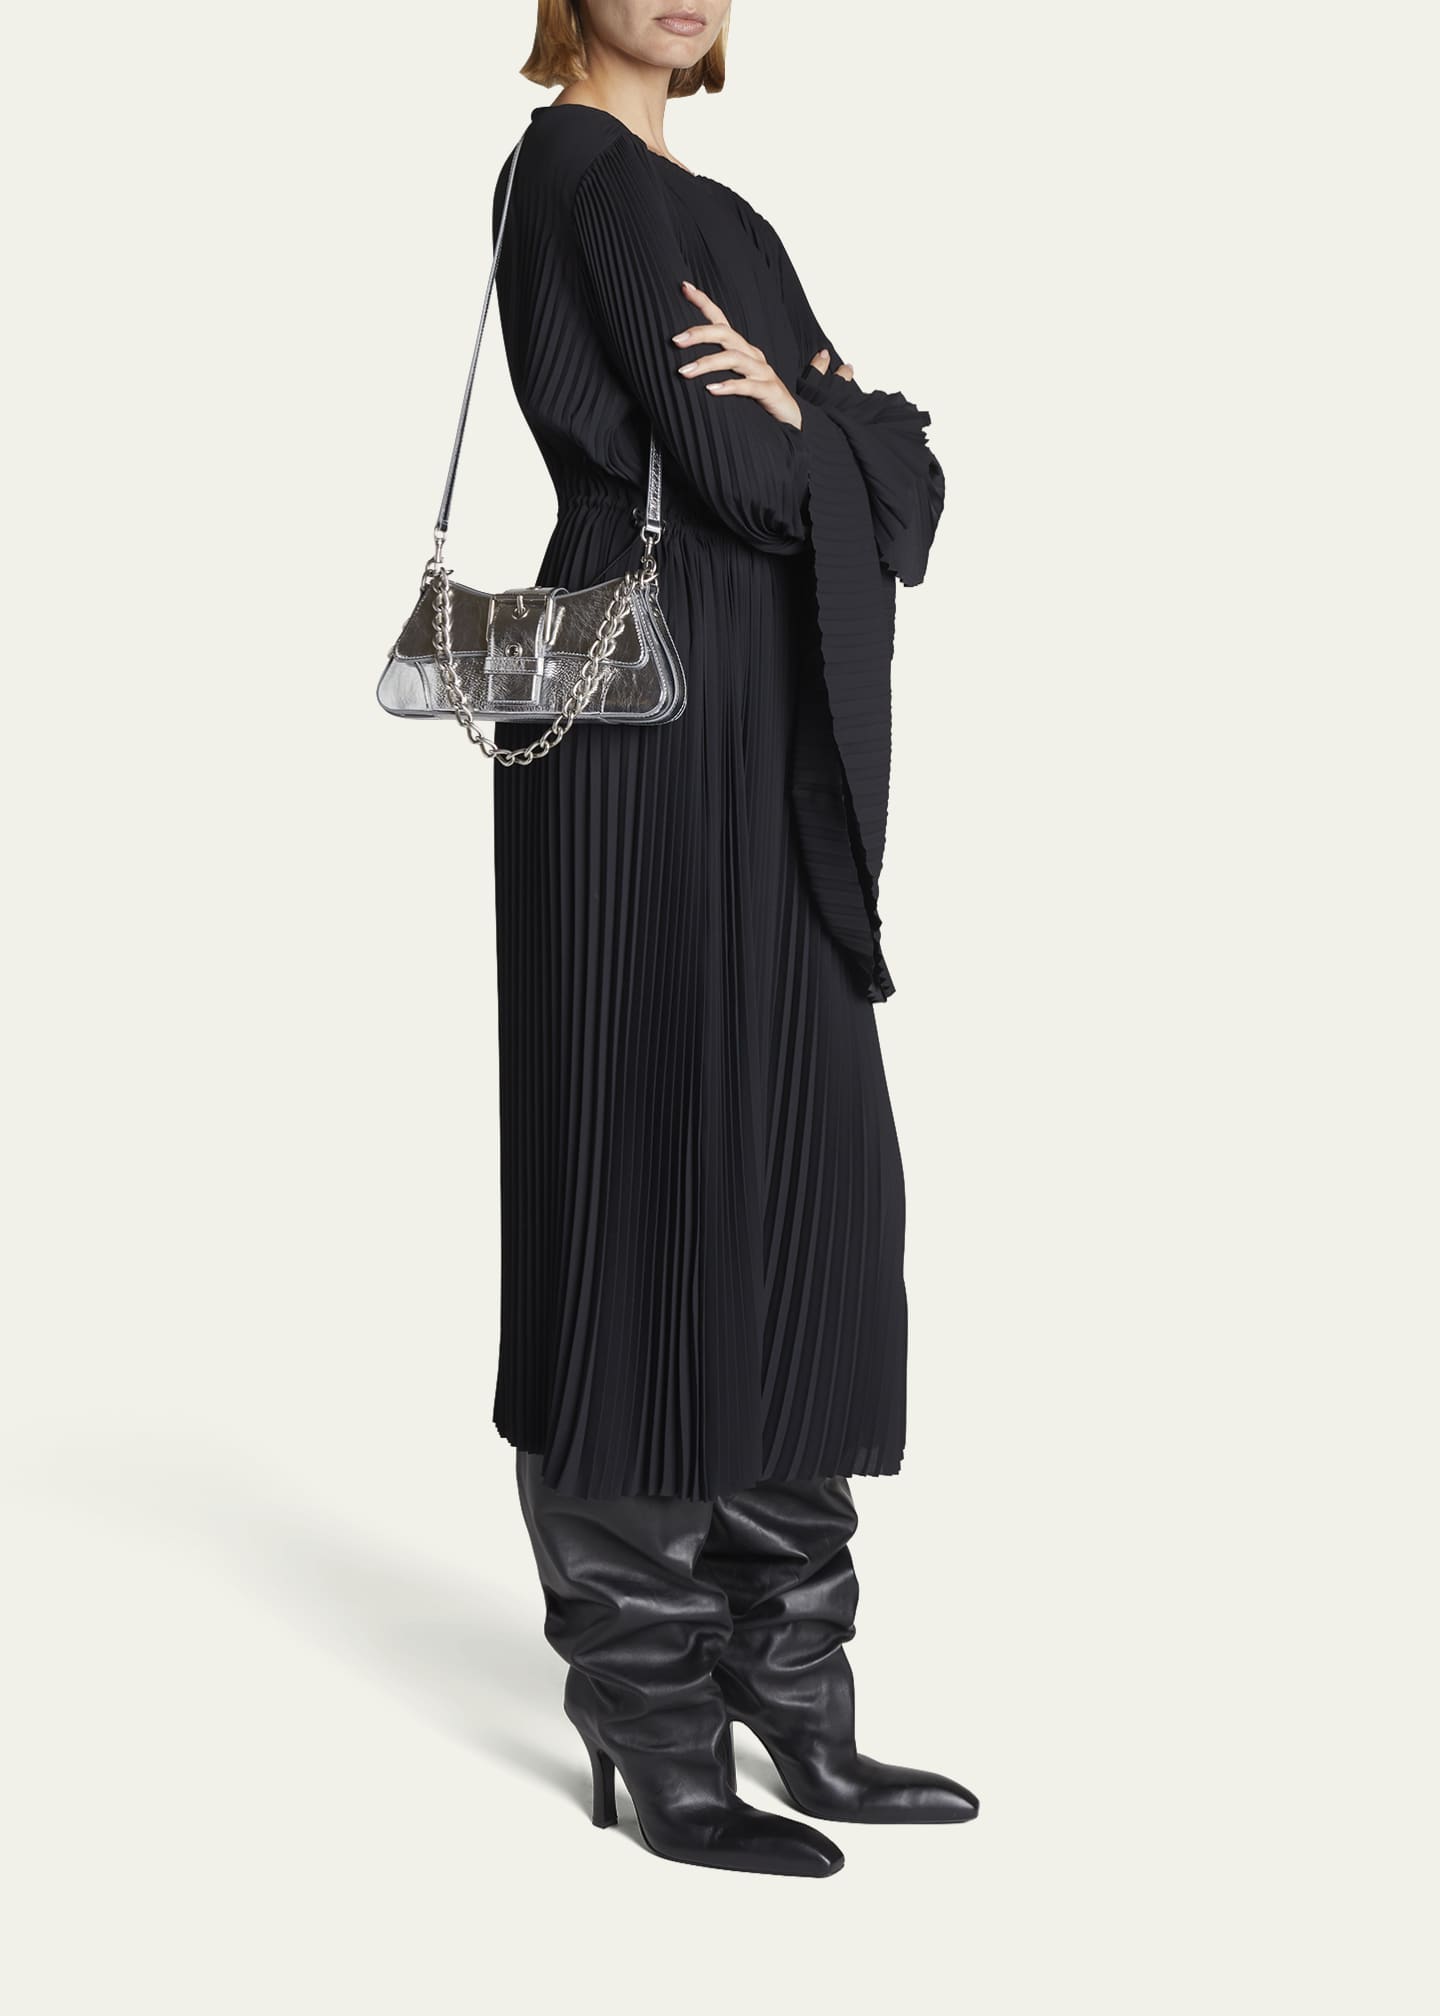 Balenciaga Lindsay Small Mirror Chain Shoulder Bag - Bergdorf Goodman